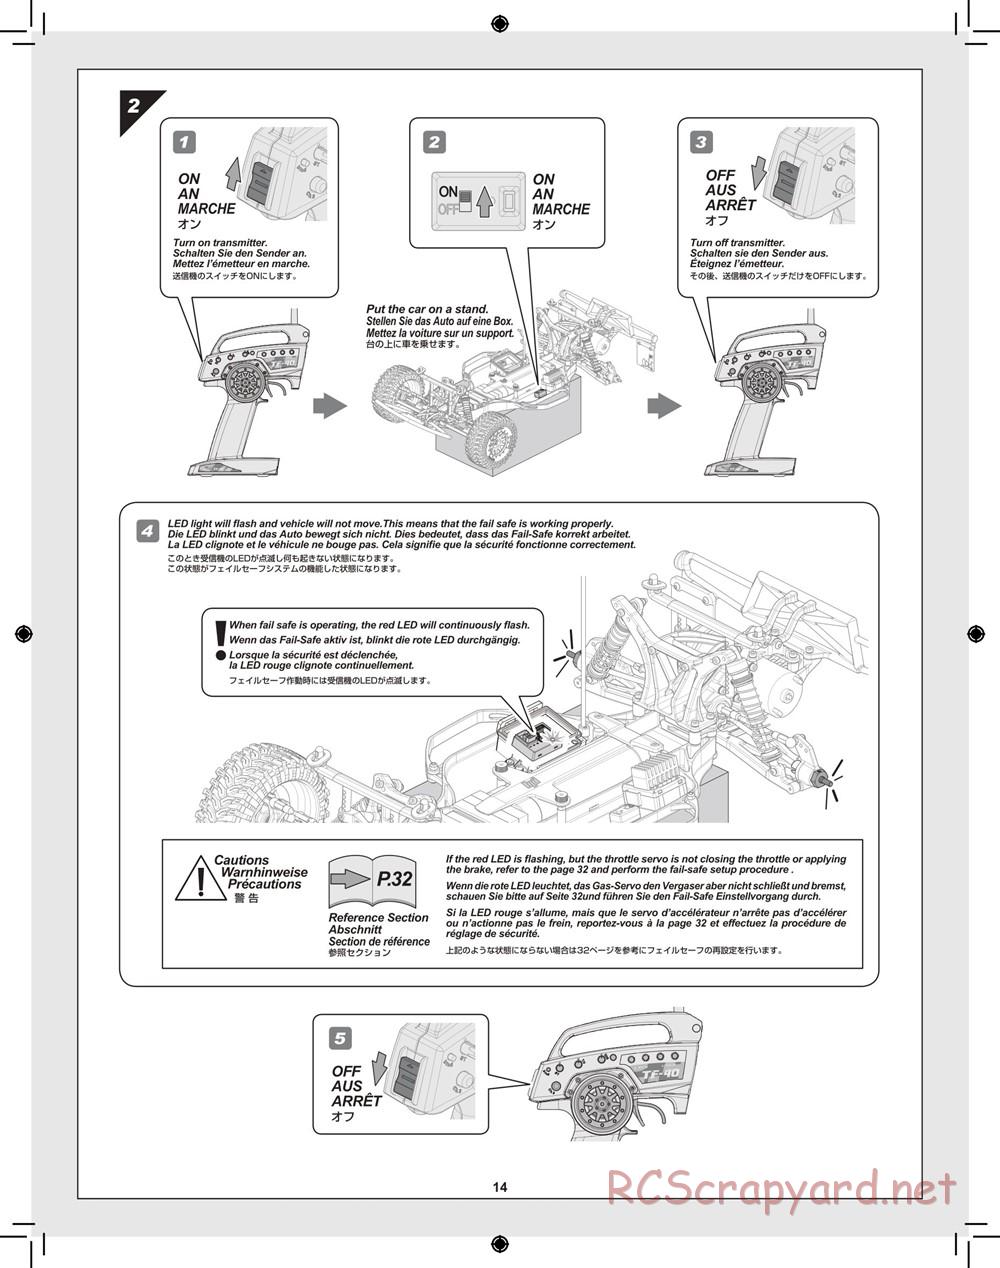 HPI - Blitz Waterproof - Manual - Page 14